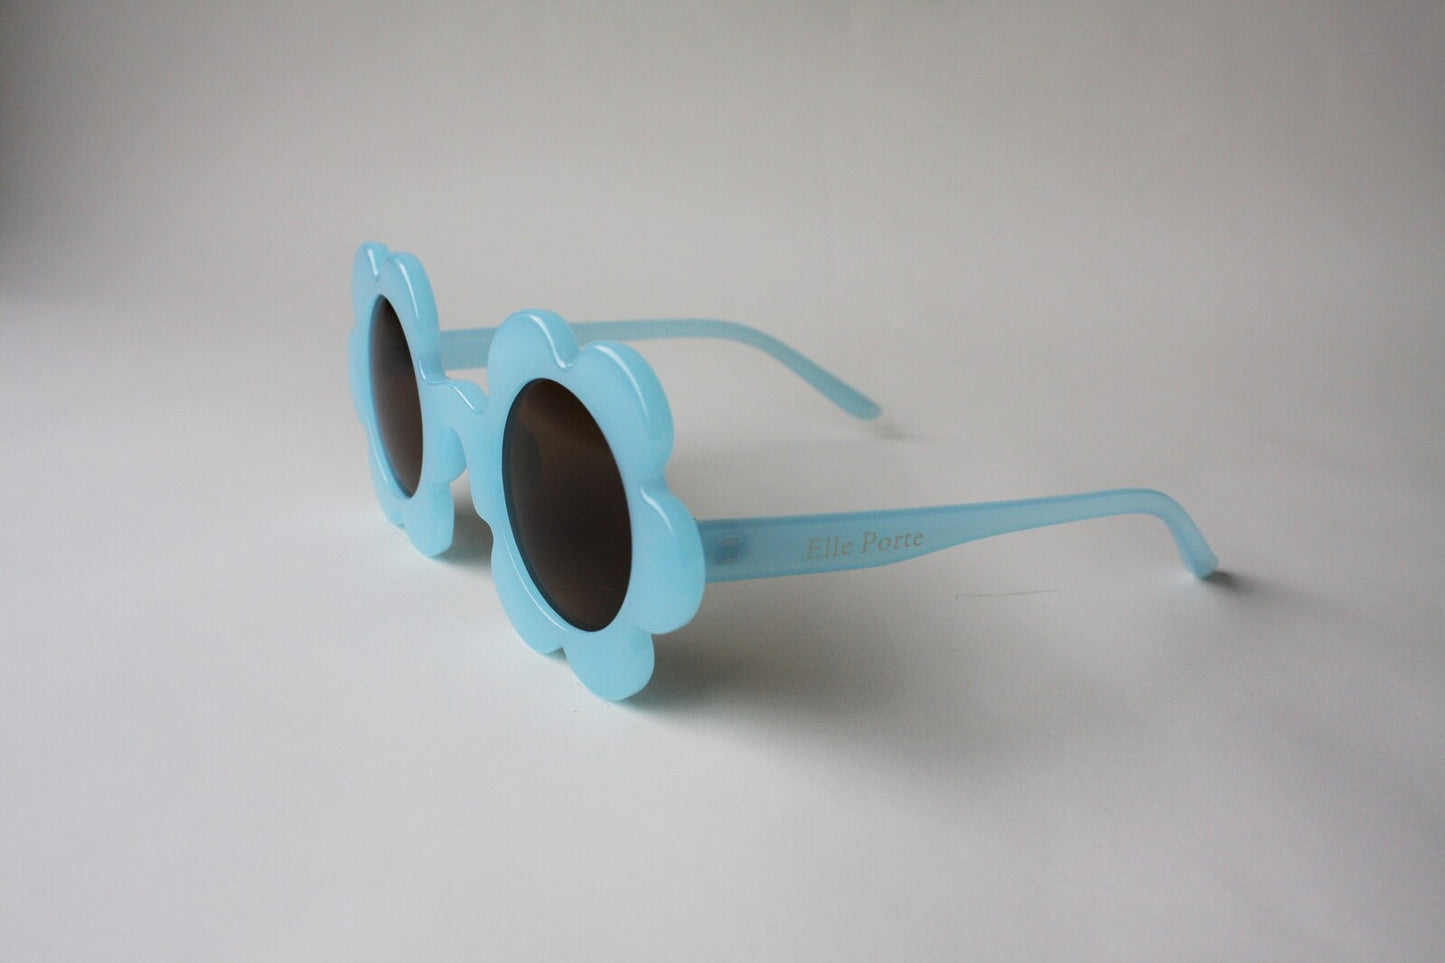 Elle Porte Daisy's Blue Heaven Sunglasses